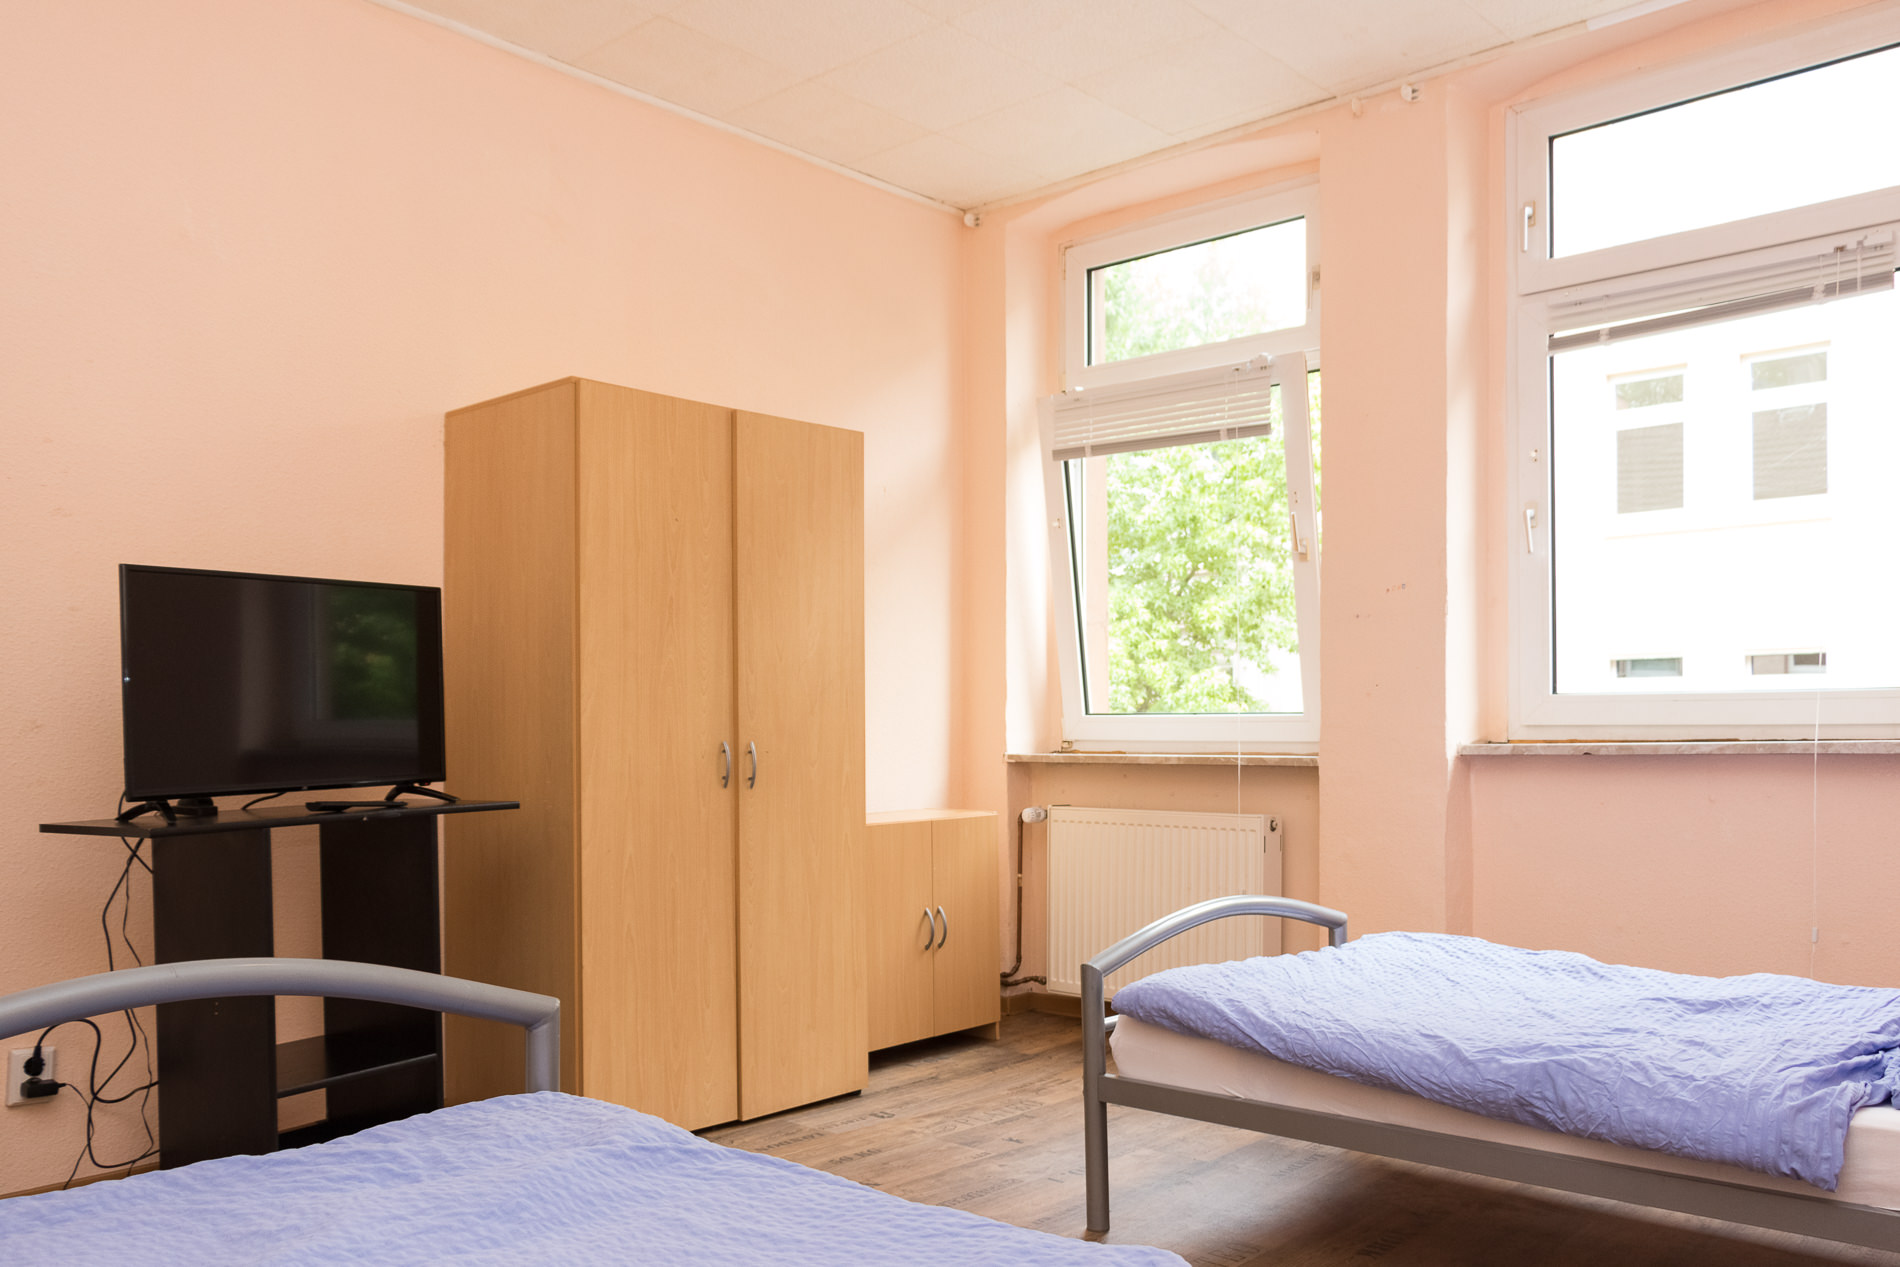 Rent furnished rooms in Dortmund Borsigplatz